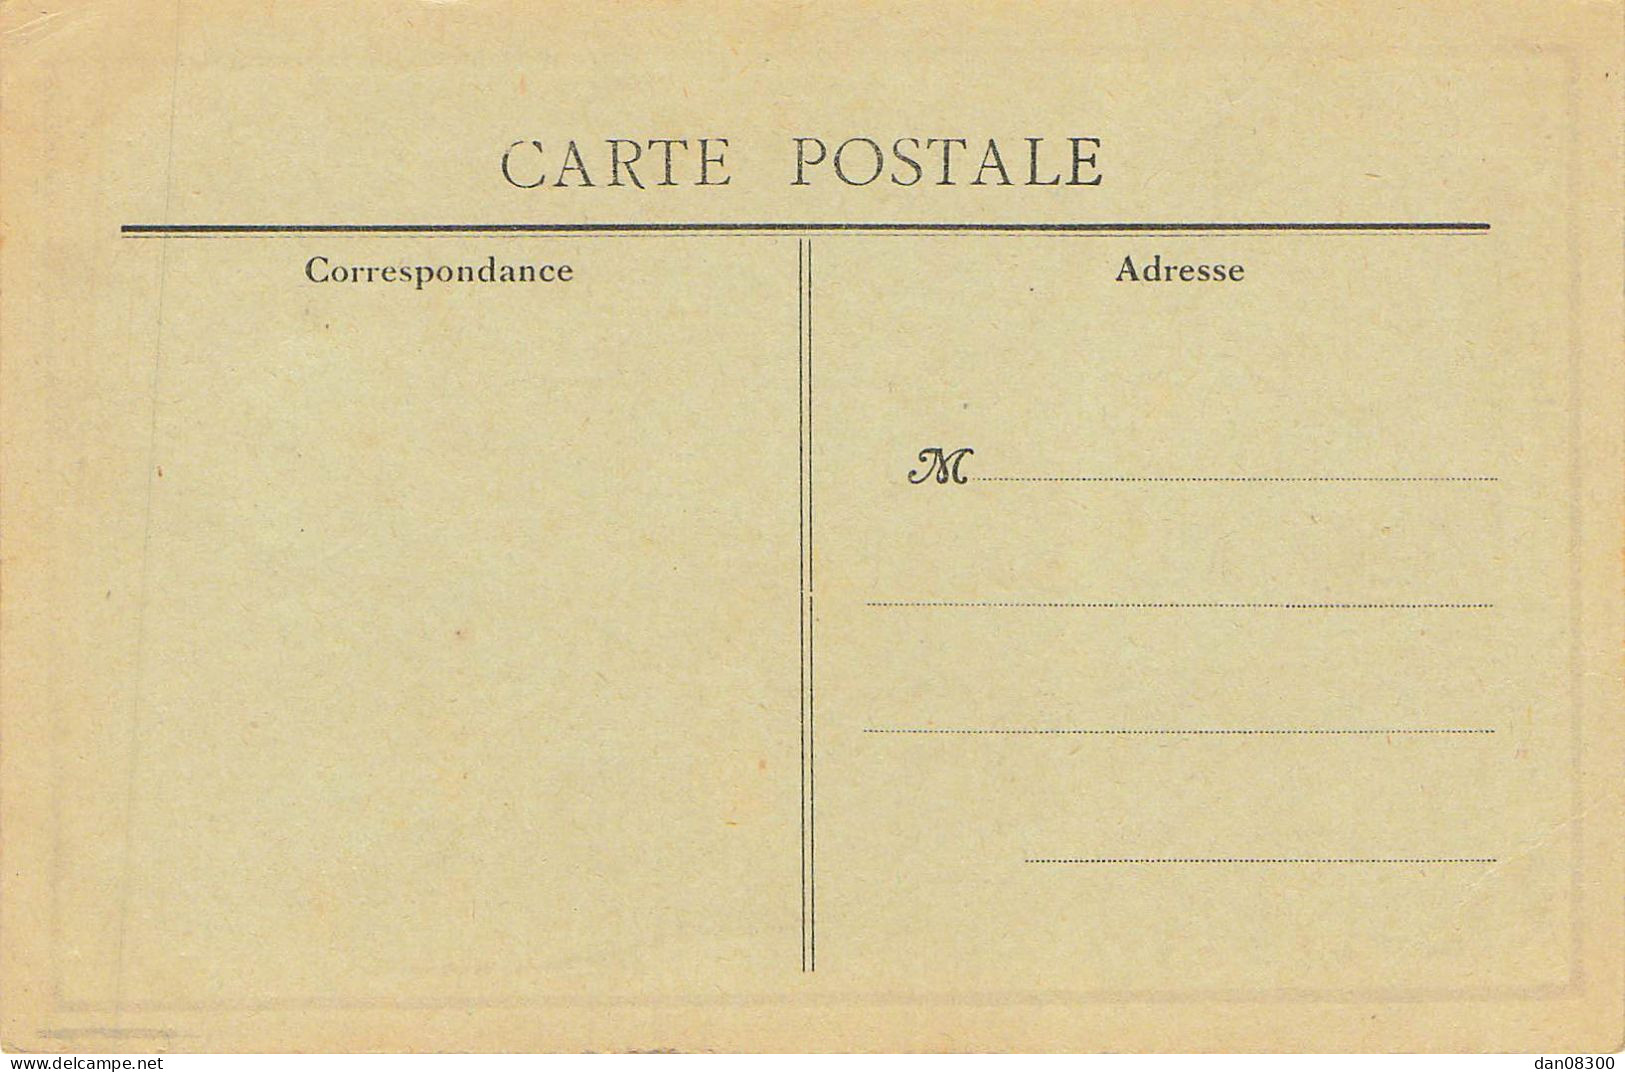 TIRAGE MENSUEL DE 100 000 FRANCS DES PASTILLES LAURET GAGNE PAR CET HOMME ILLUSTRATION - Werbepostkarten